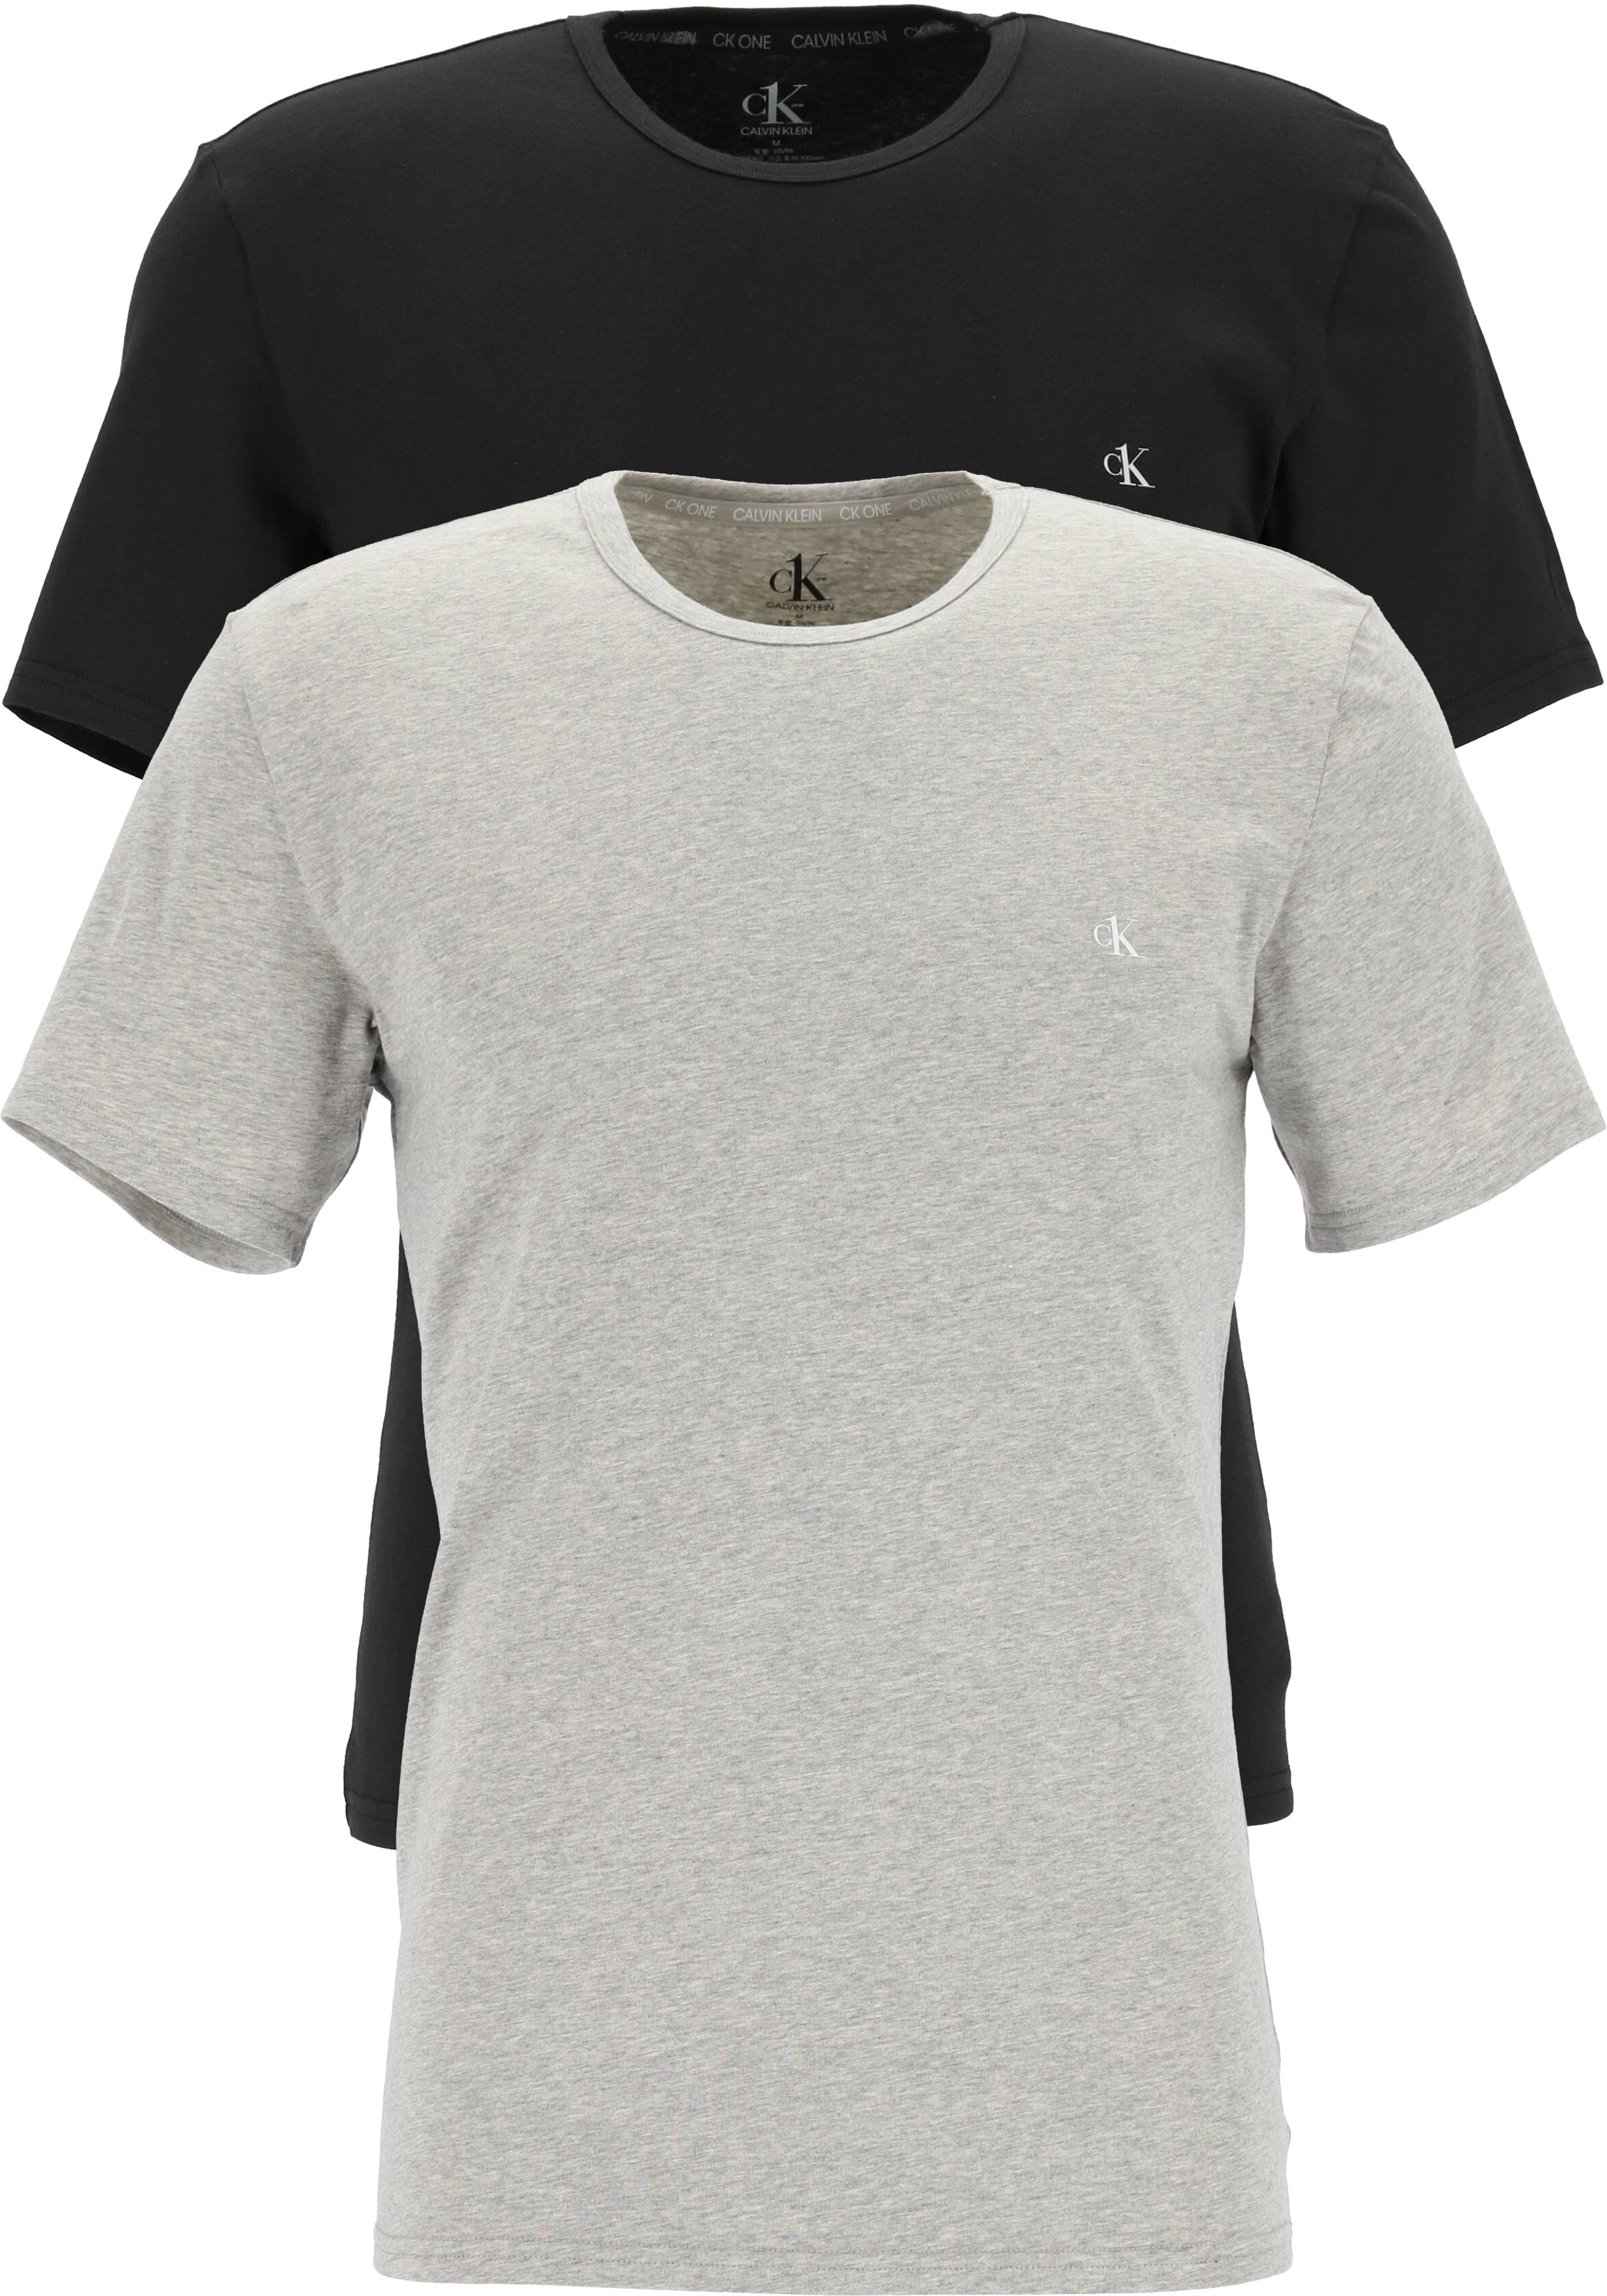 Calvin Klein CK ONE cotton crew neck T-shirts (2-pack), heren T-shirts... - DEALS: bestel vele artikelen topmerken met korting